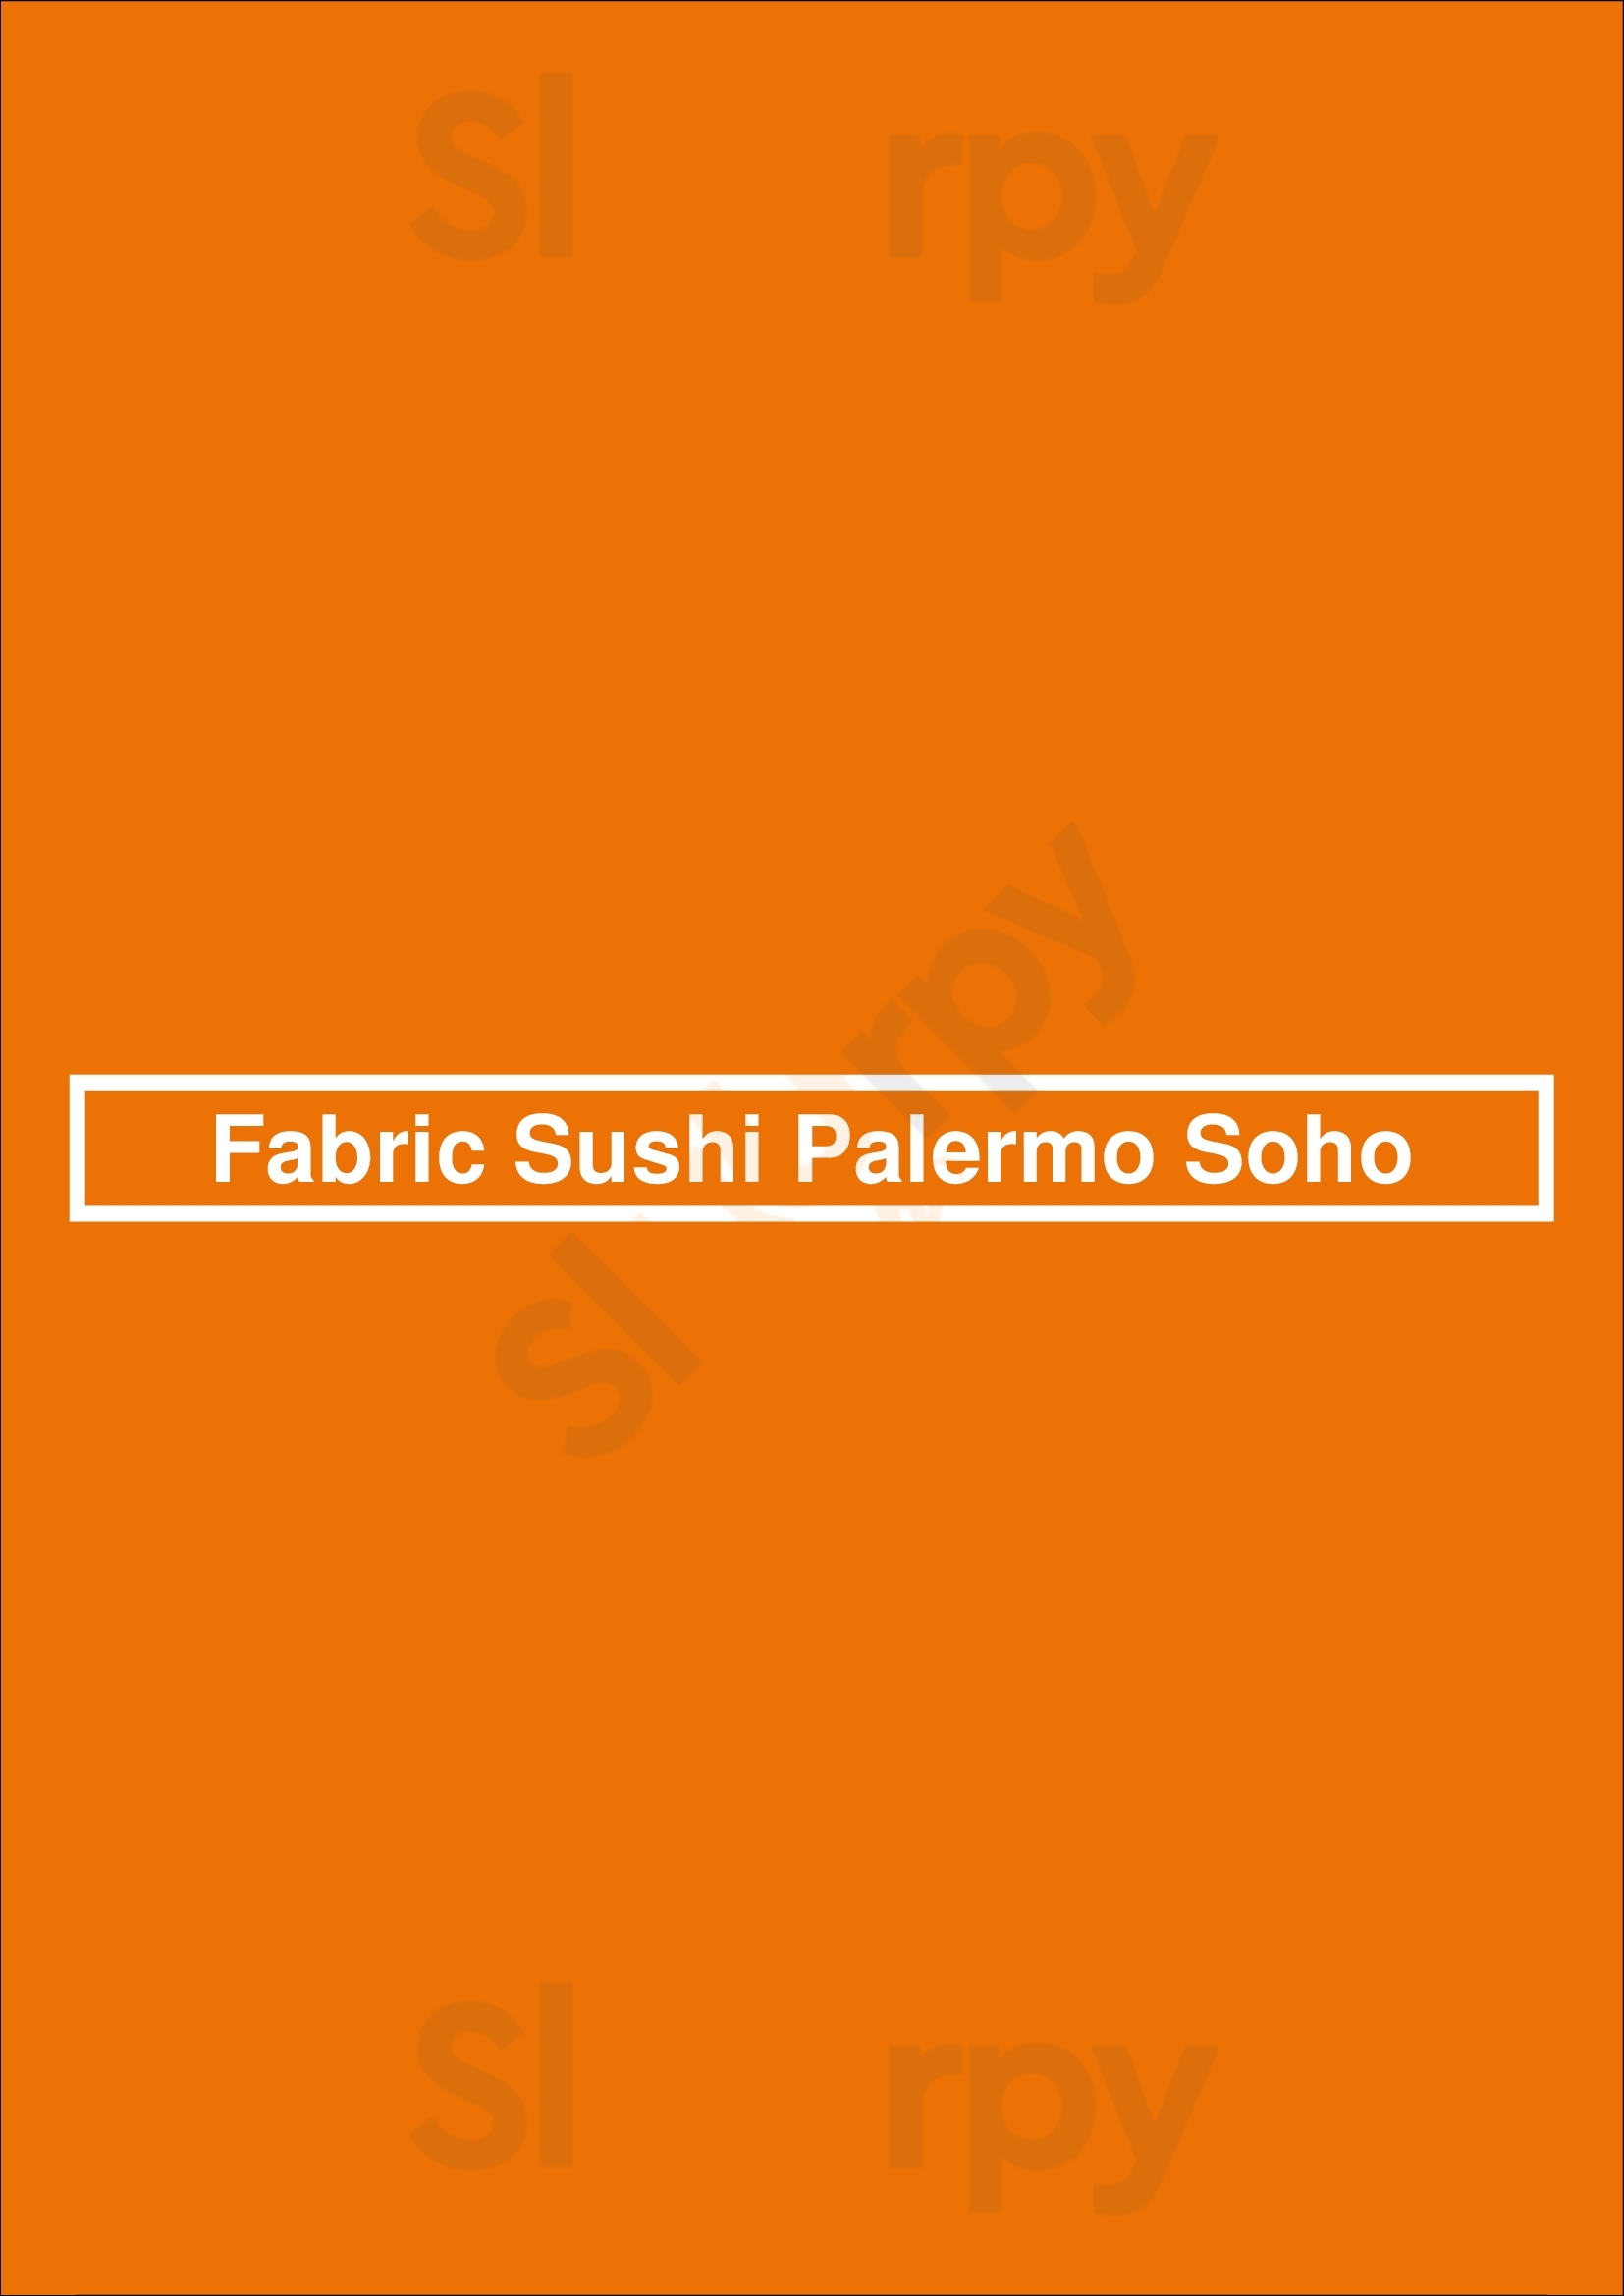 Fabric Sushi Palermo Soho Buenos Aires Menu - 1